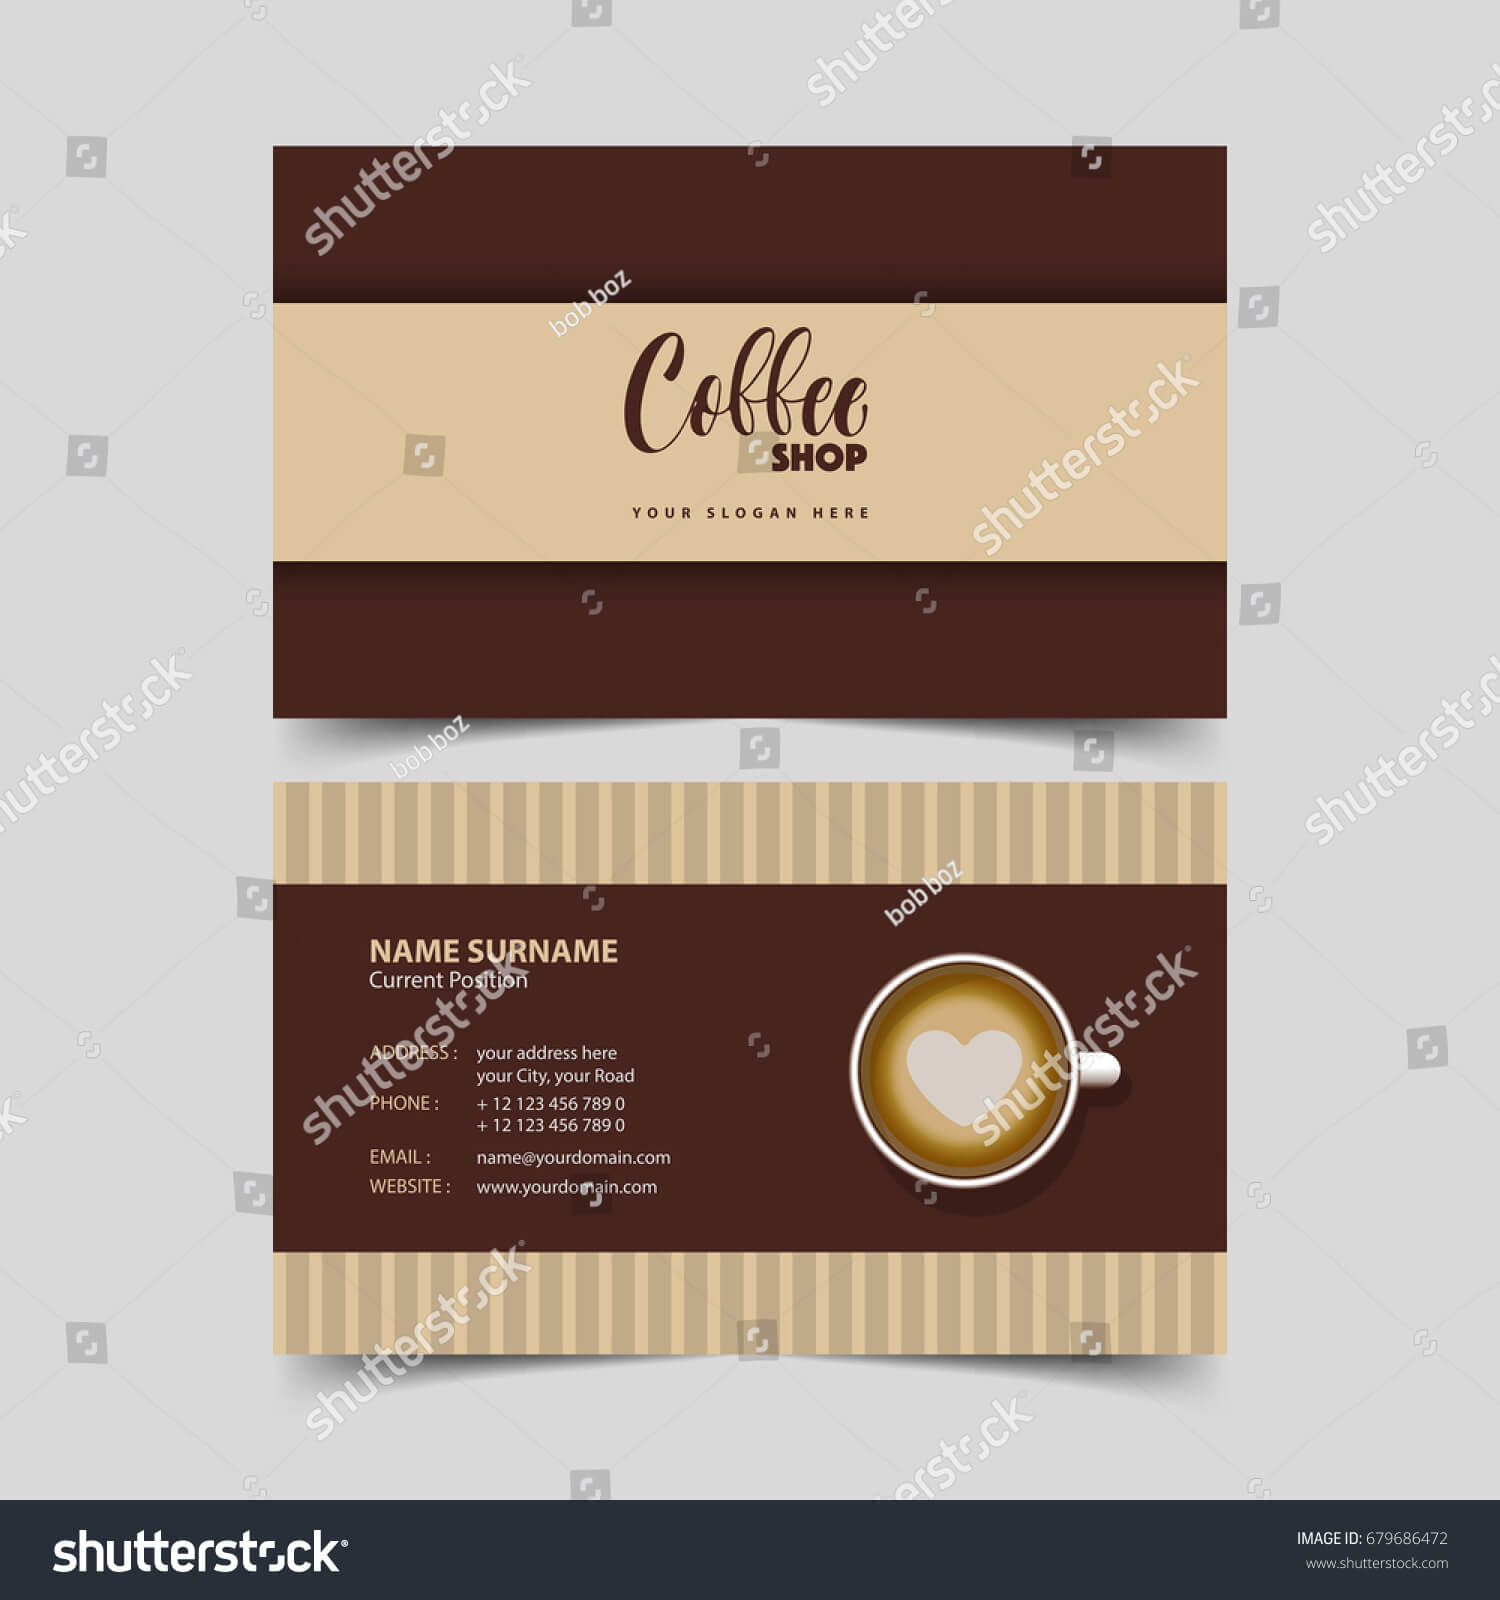 Coffee Shop Business Card Design Template Stock Vector Within Coffee Business Card Template Free